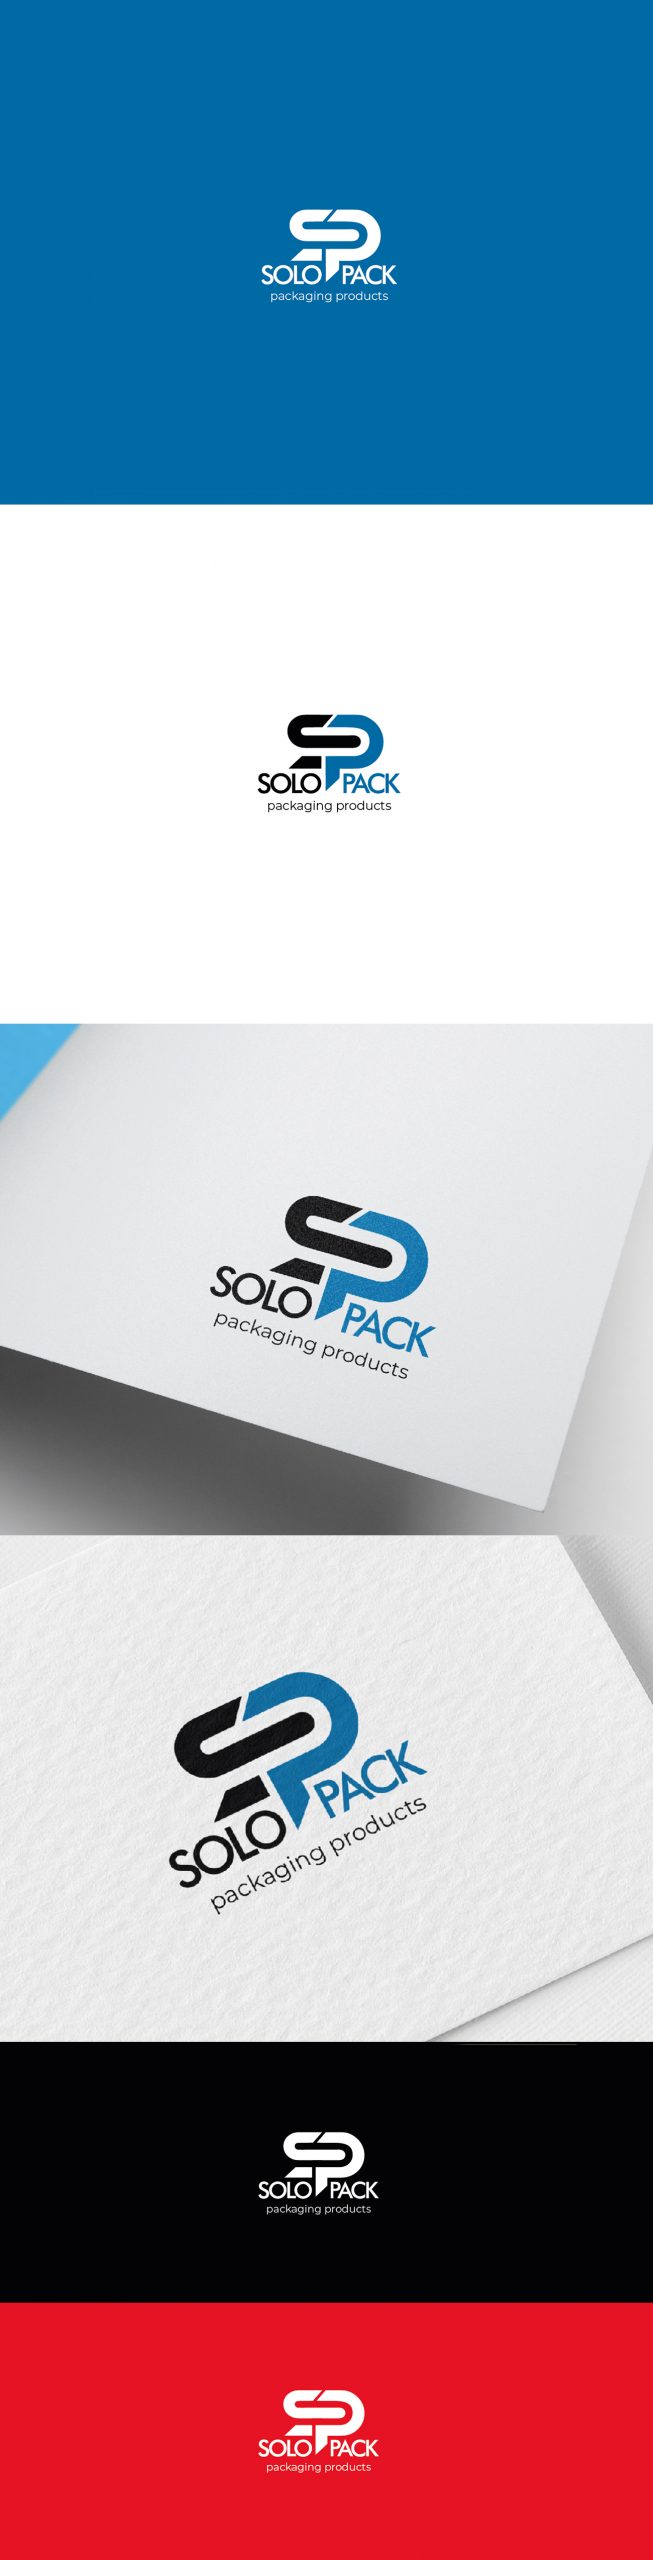 solopack-logo-tasarim